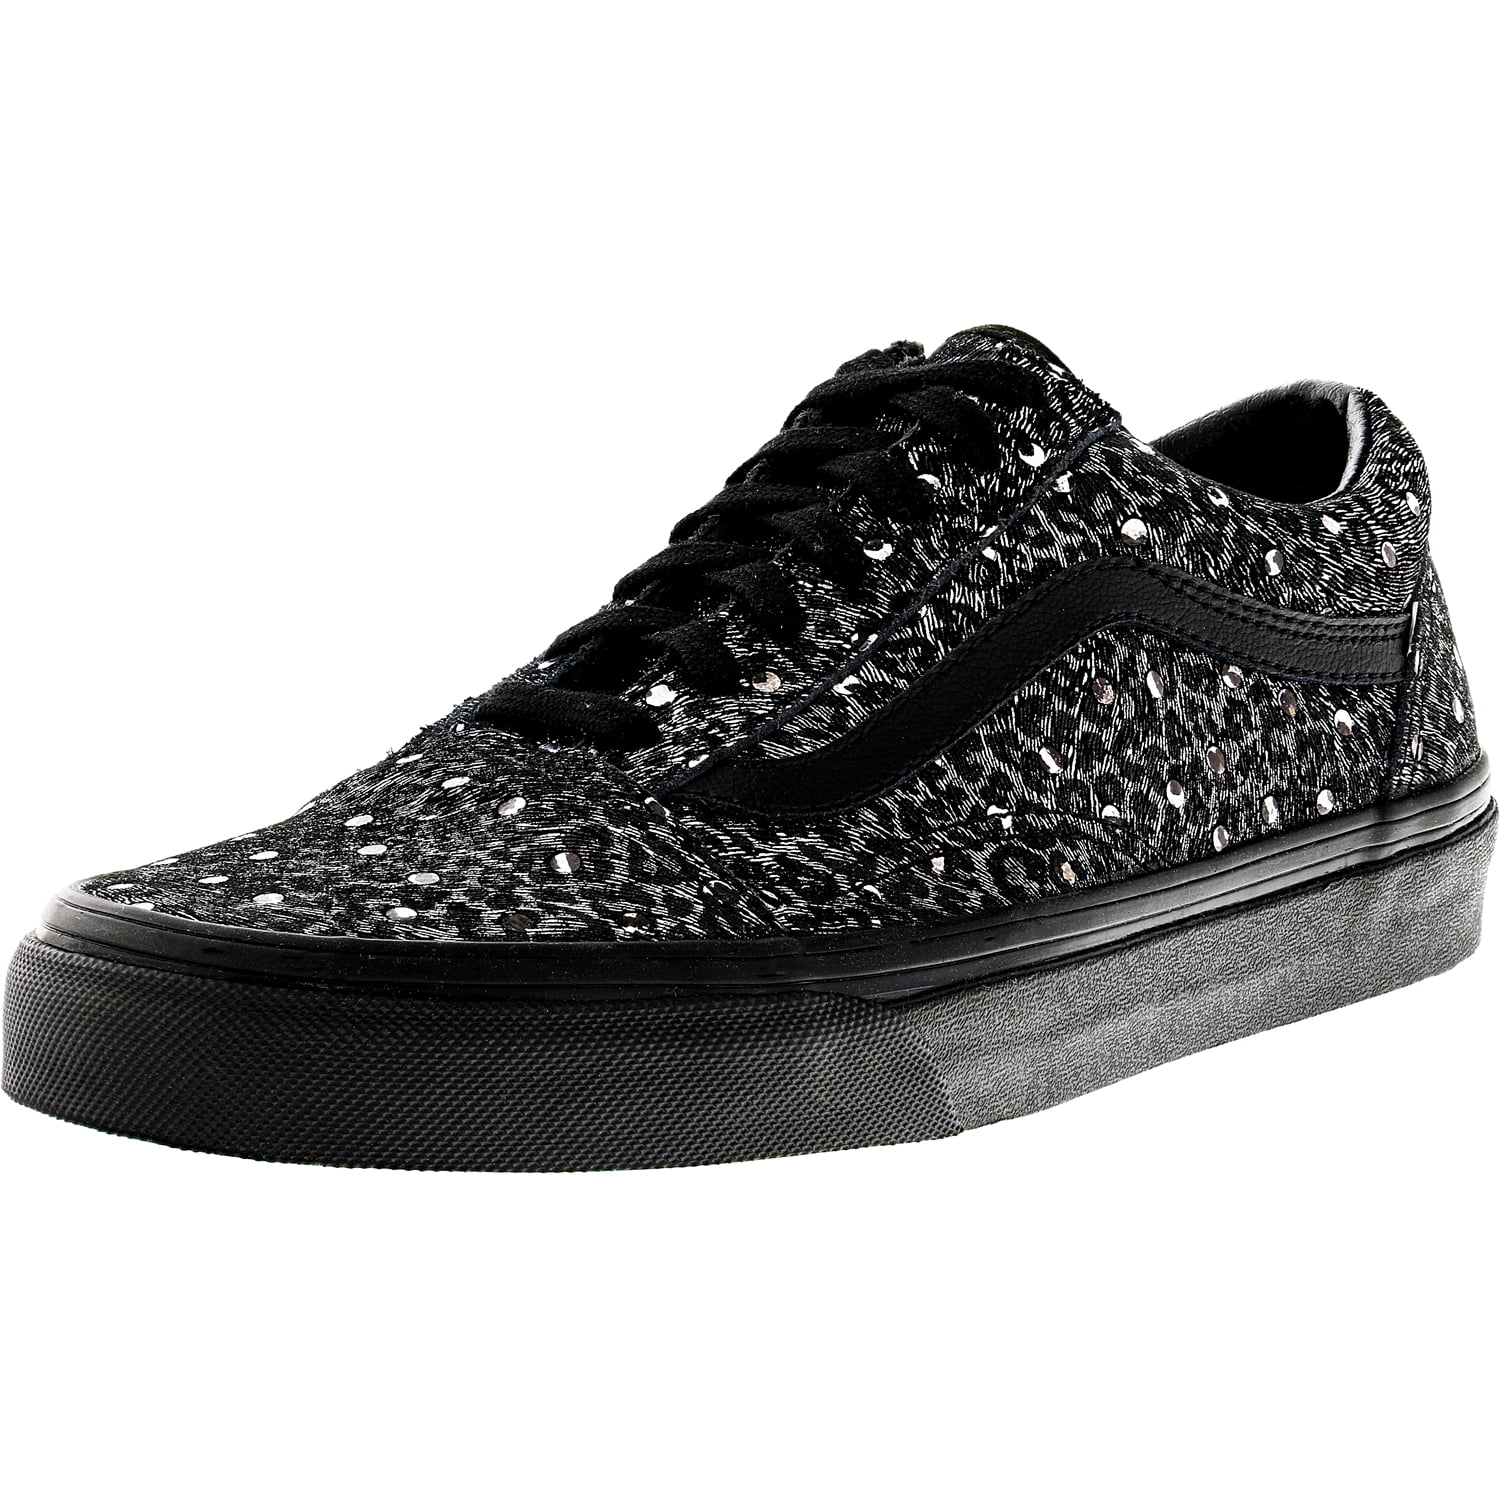 Vans Old Skool Metallic Leopard Black Ankle-High Fabric Fashion Sneaker -   / 6M 